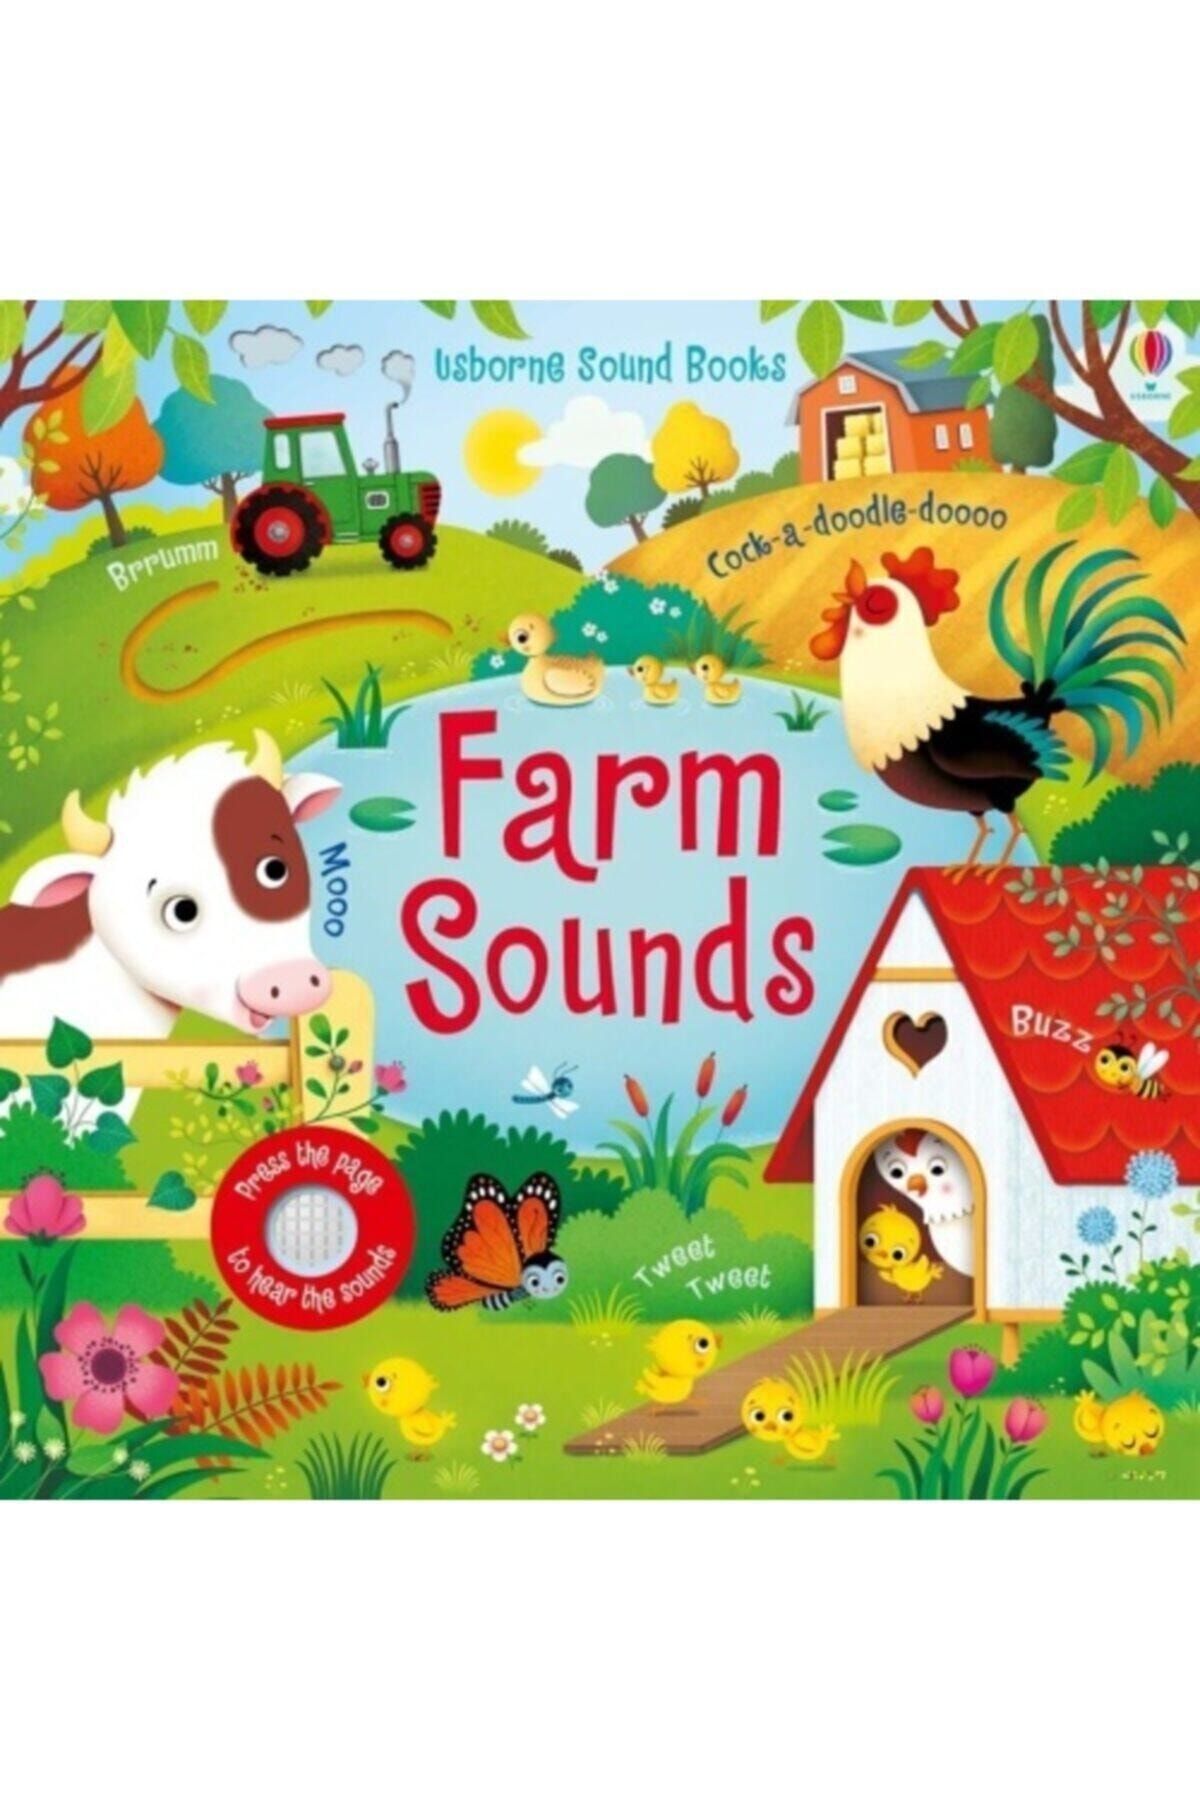 Usborne Sound Books - Farm Sounds